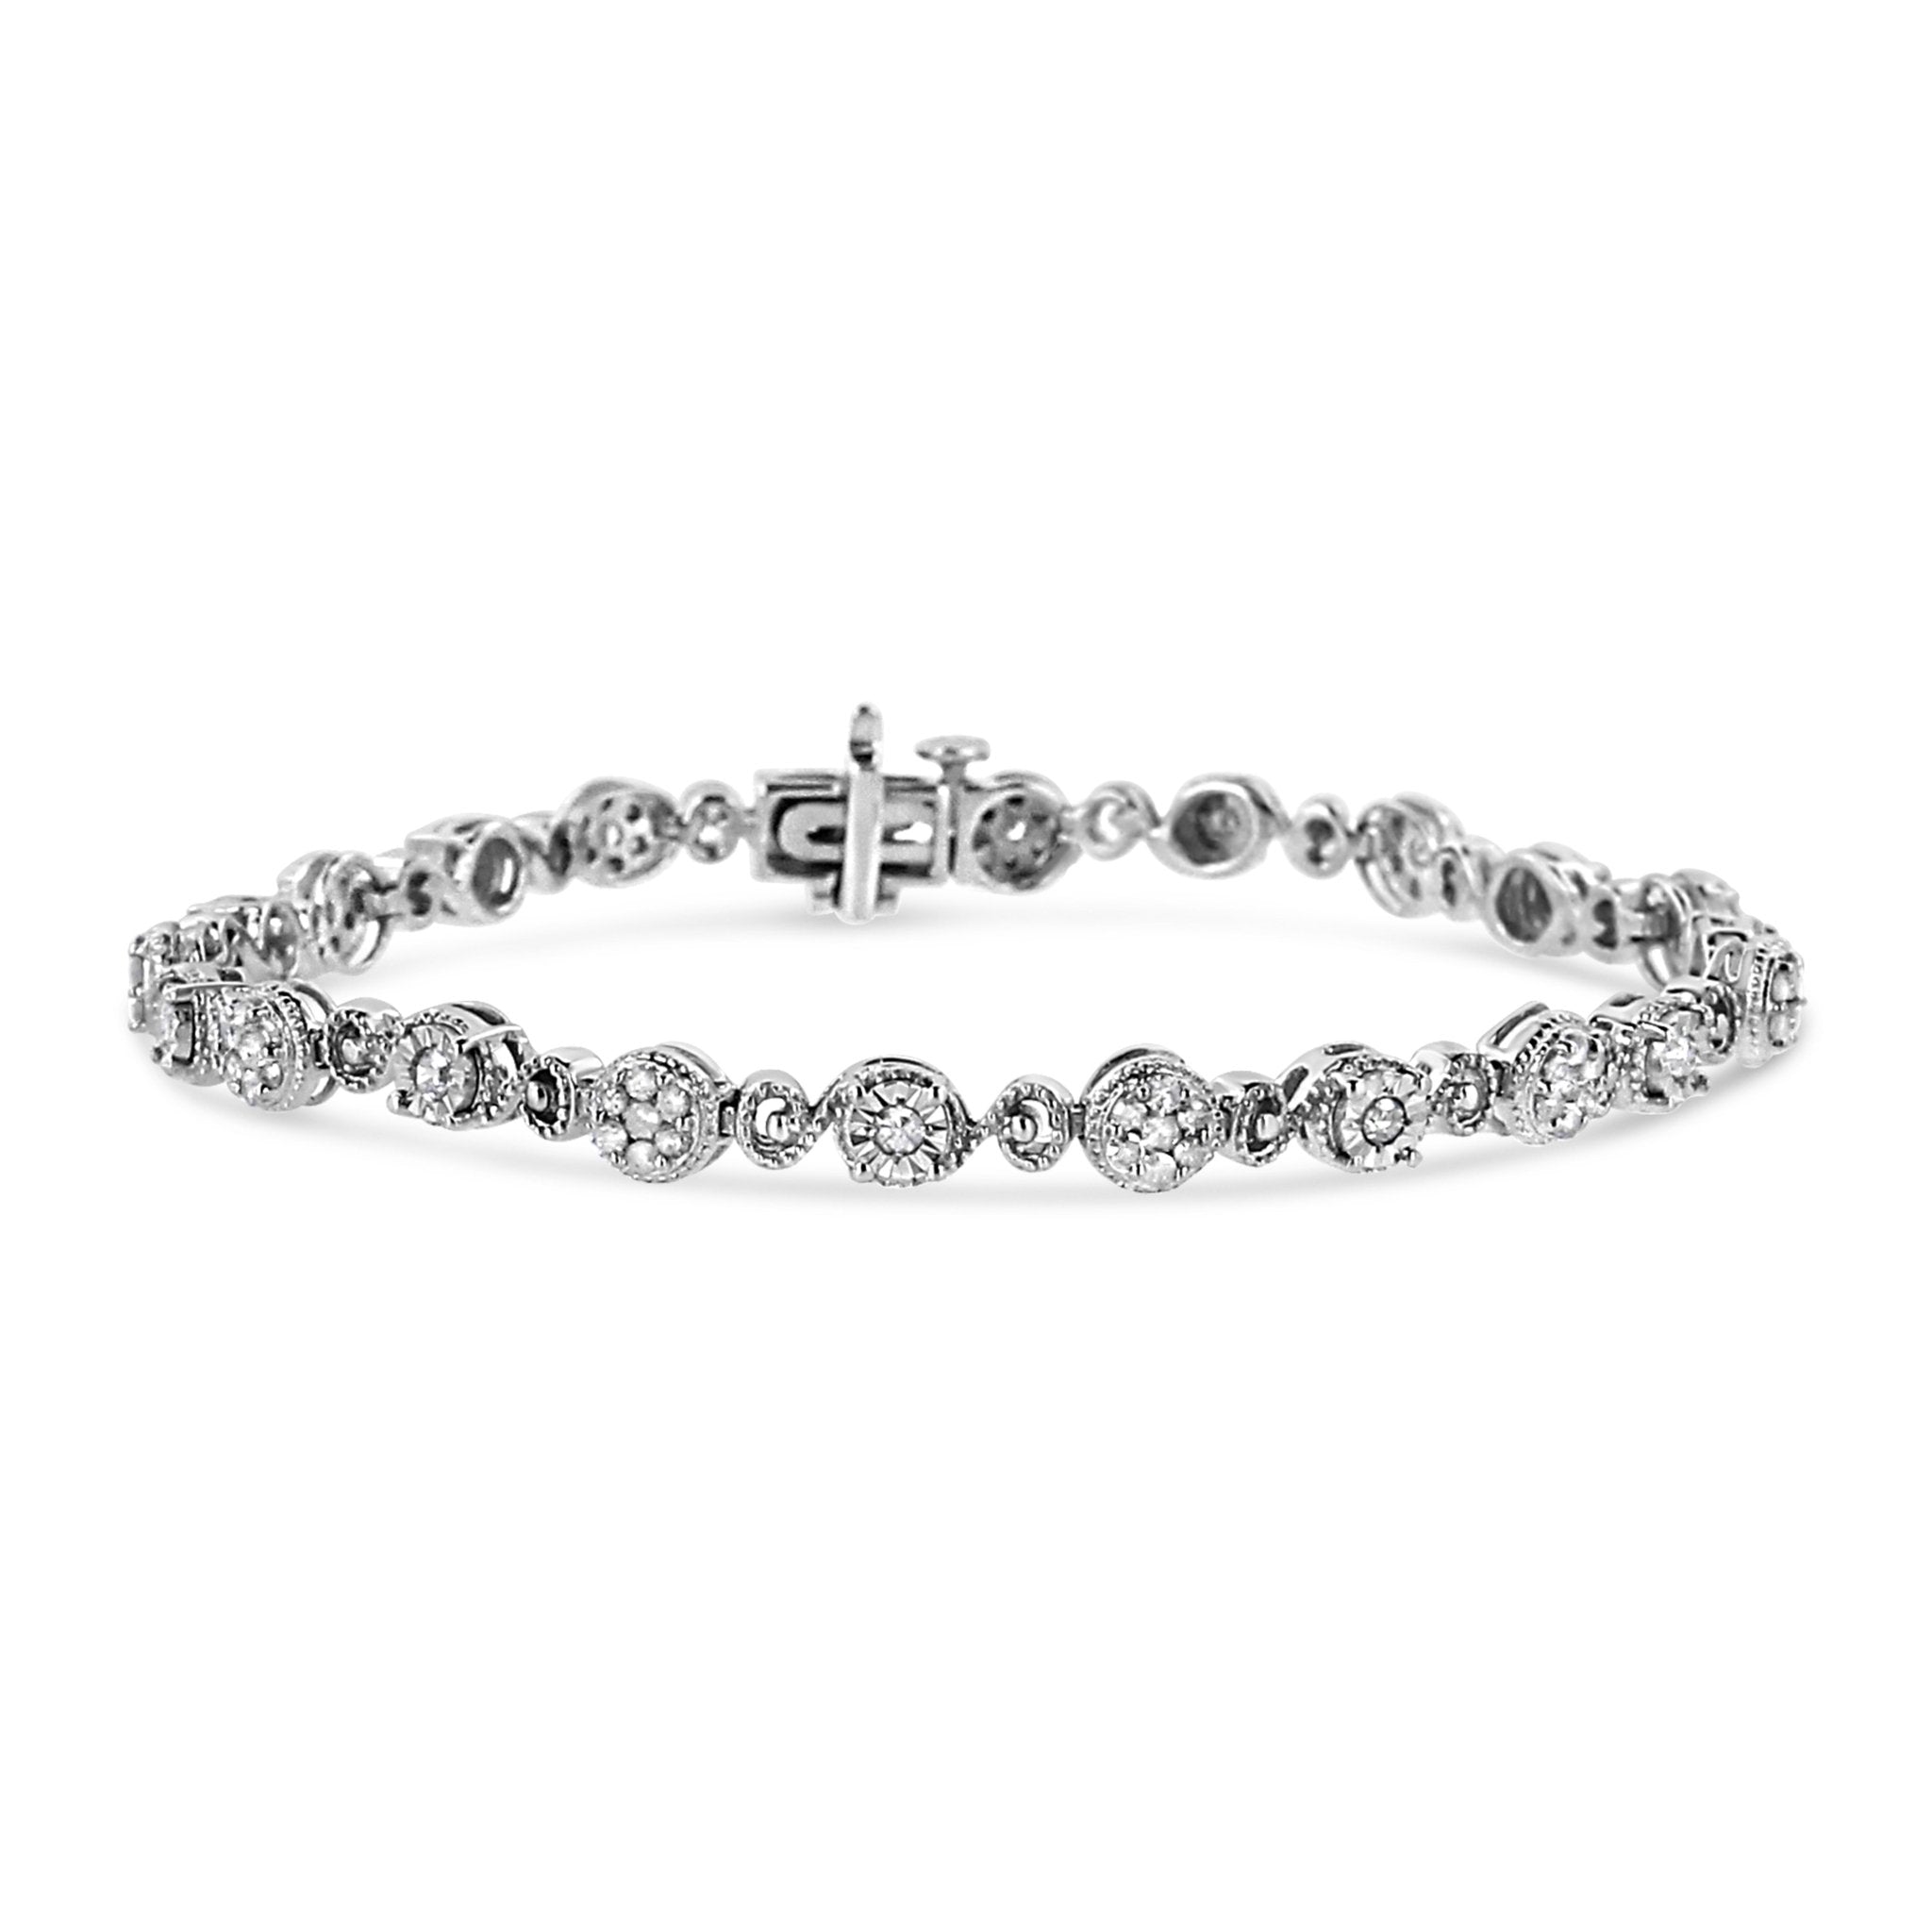 .925 Sterling Silver 1.0 Cttw Diamond Swirl Beaded Link Bracelet (I-J Color, I3-Promo Clarity) - 7.25